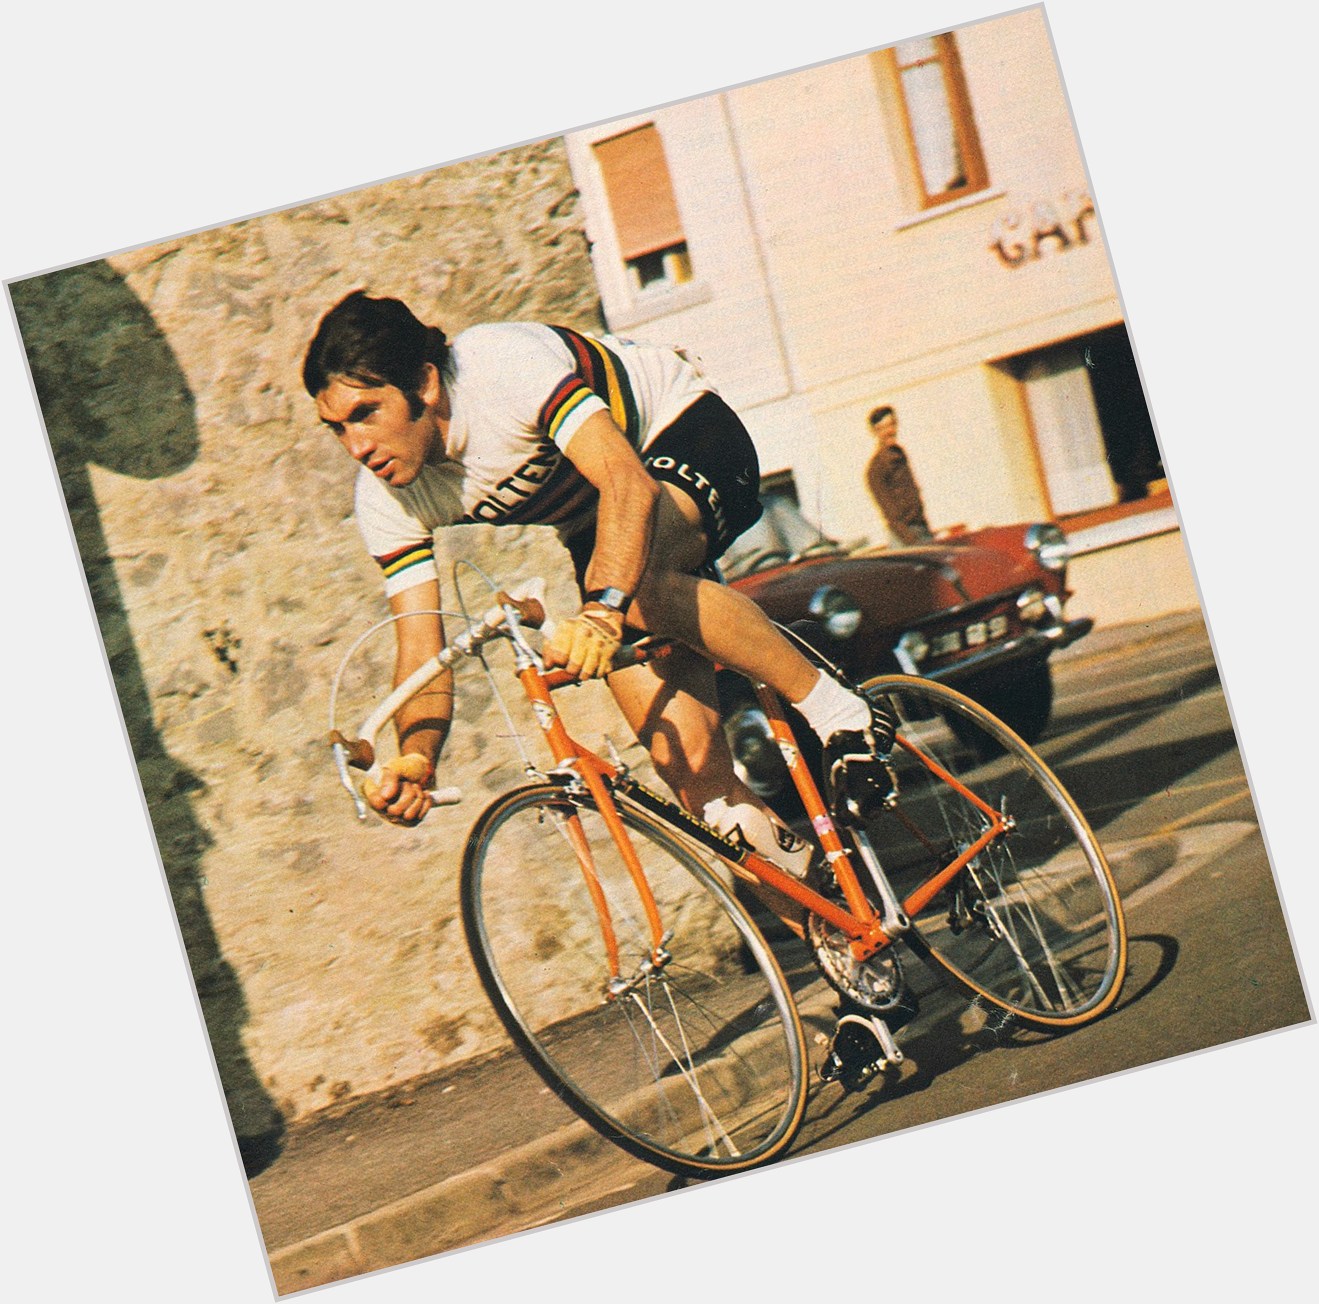 Https://fanpagepress.net/m/E/Eddy Merckx Dating 2